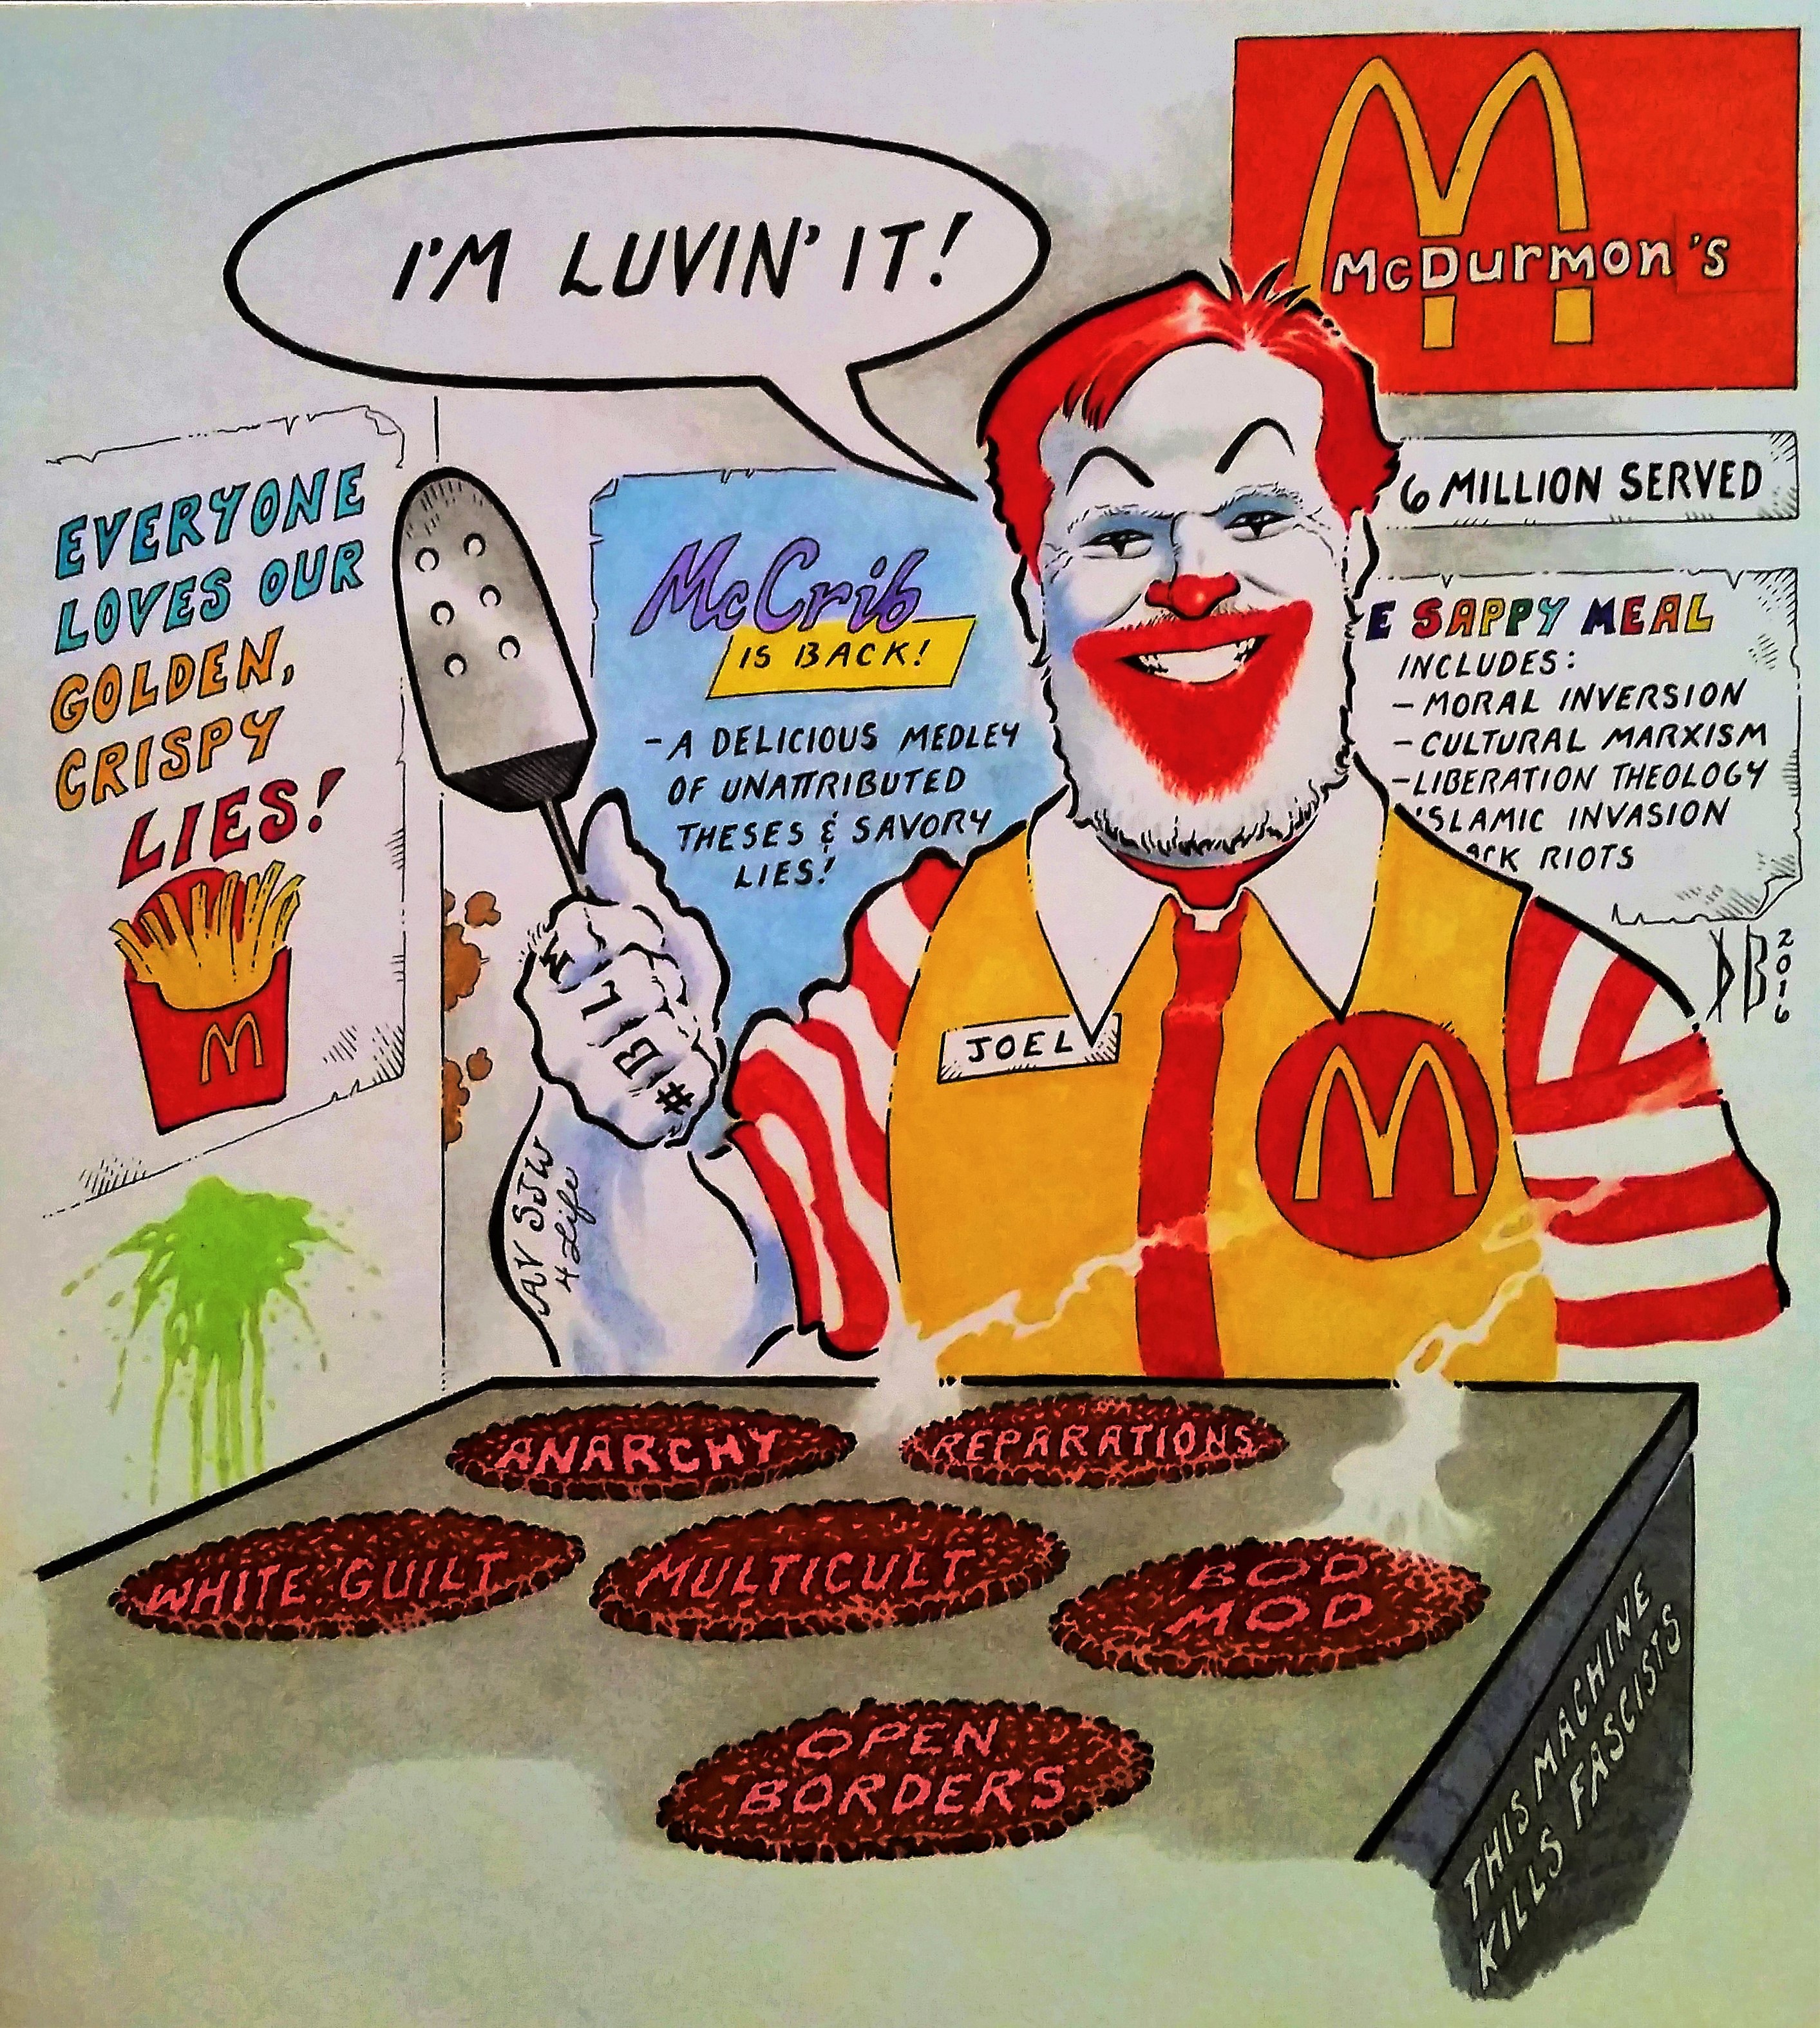 McDurmon's-Joel-McDonald's-American-Vision-unconscious-racism-police-BlackLivesMatter-multiculturalism